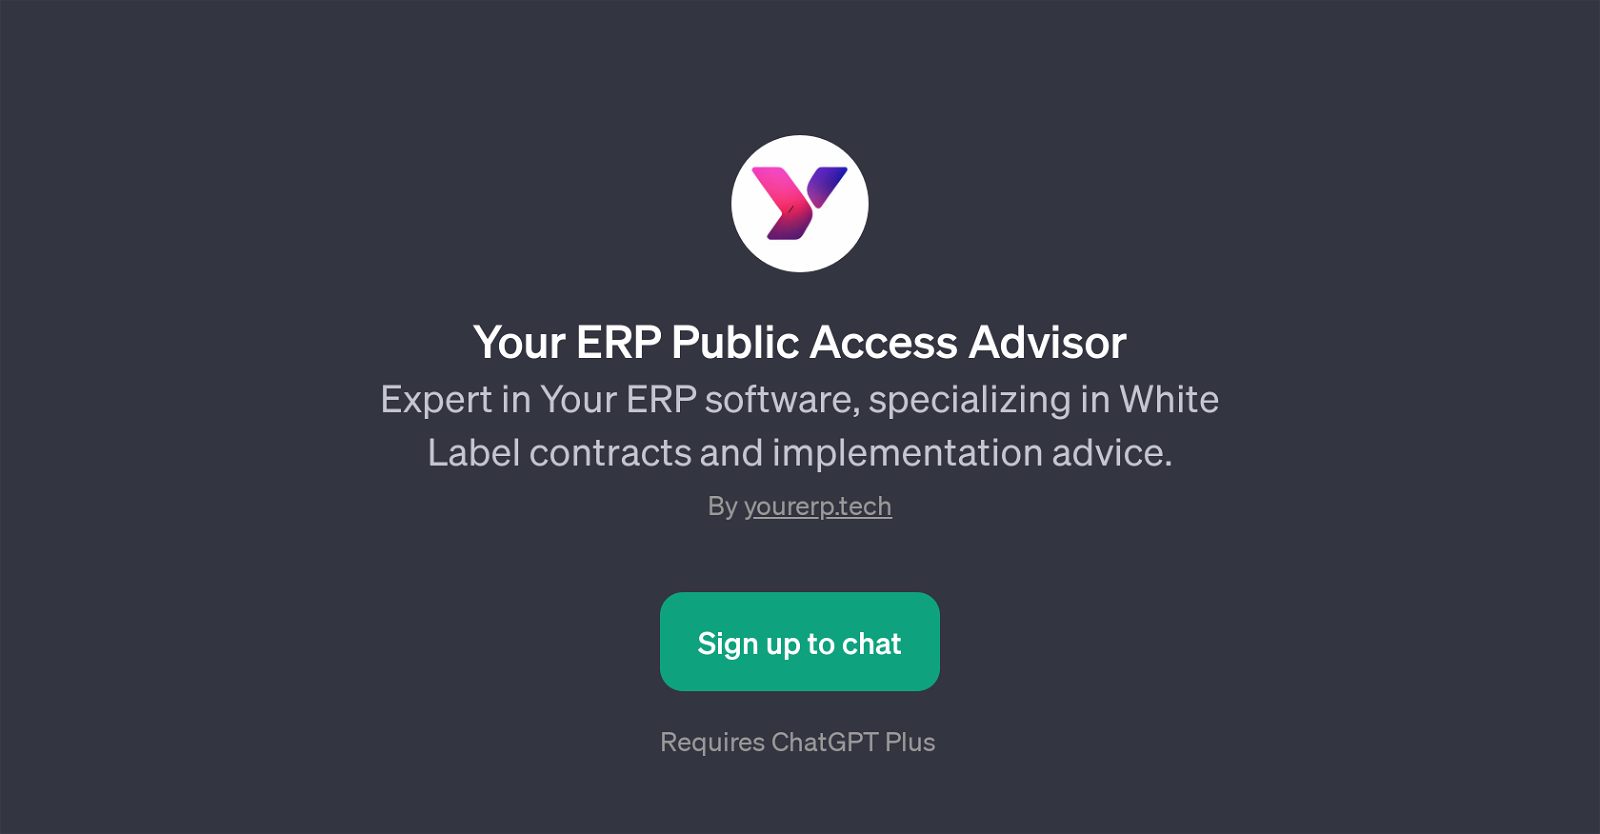 Your ERP Public Access Advisor website